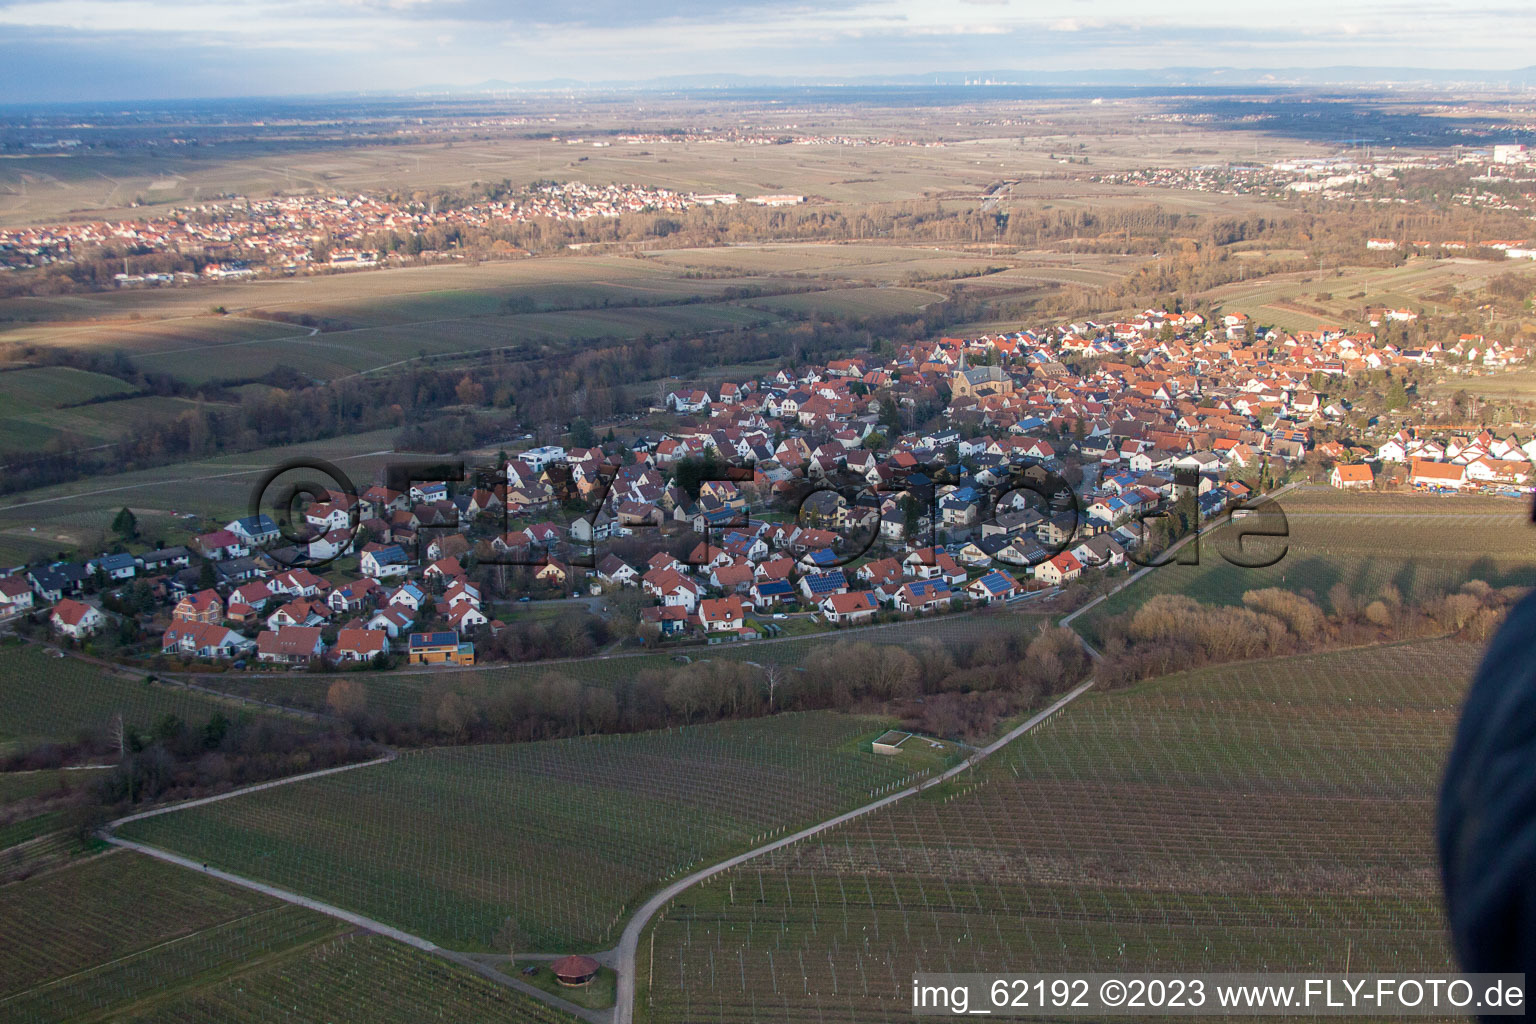 Aerial view of District Arzheim in Landau in der Pfalz in the state Rhineland-Palatinate, Germany